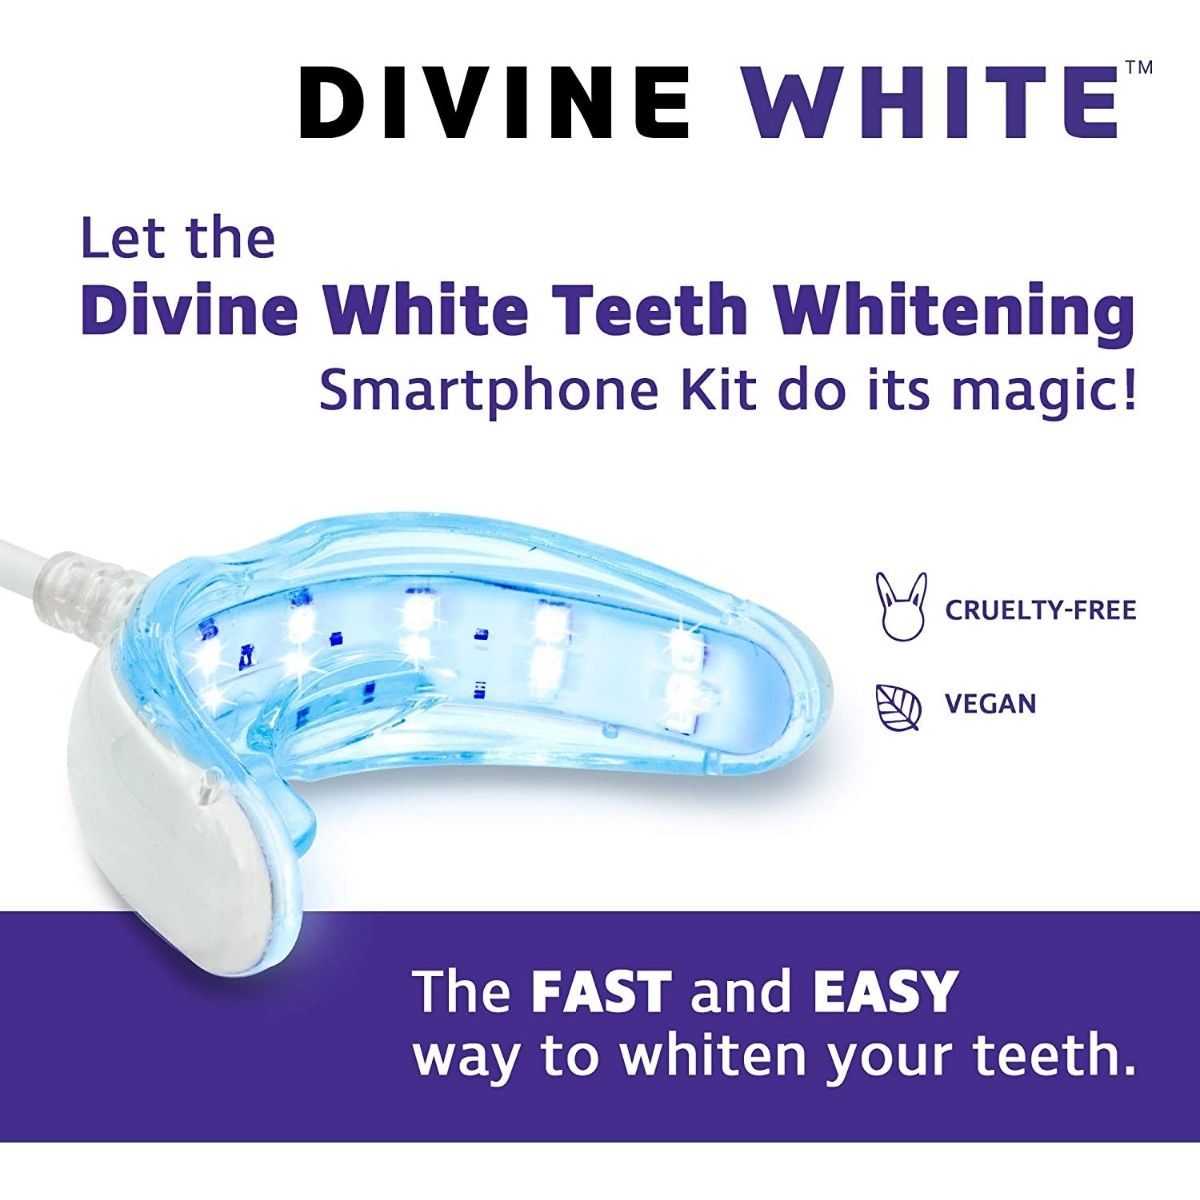 Teeth Whitening Smartphone Kit